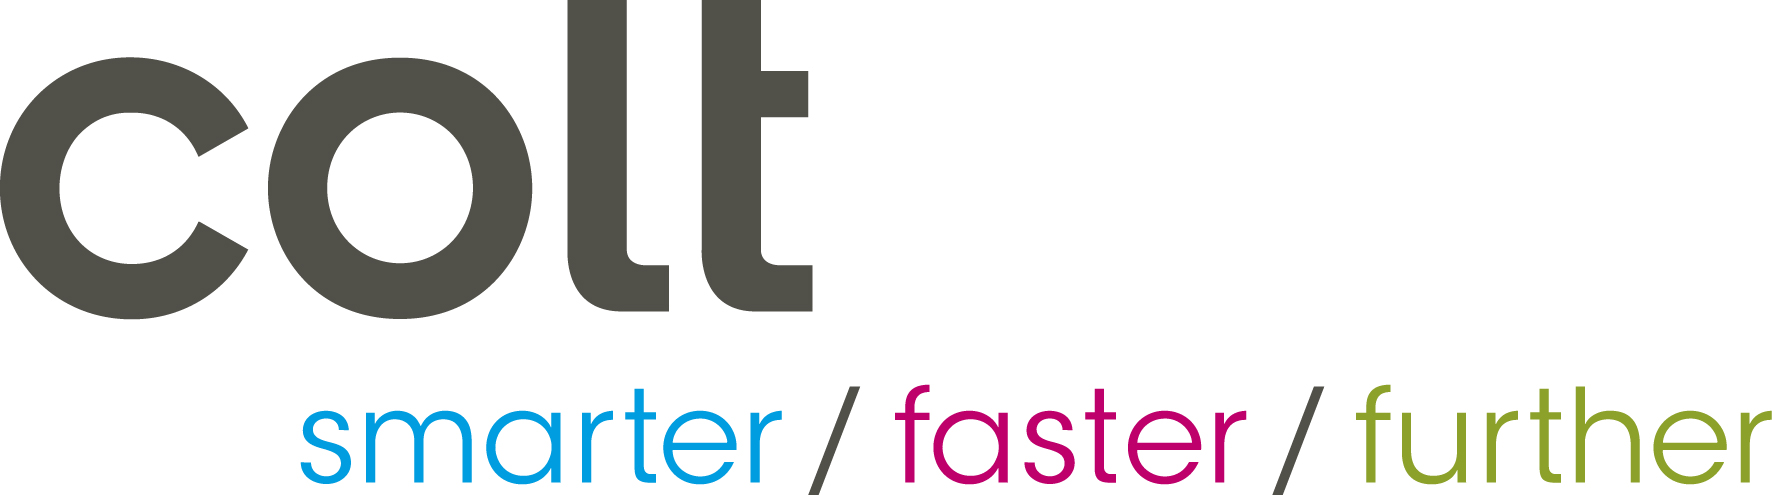 Компания Colt Telecom логотип. Ksu Colt. Faster farther